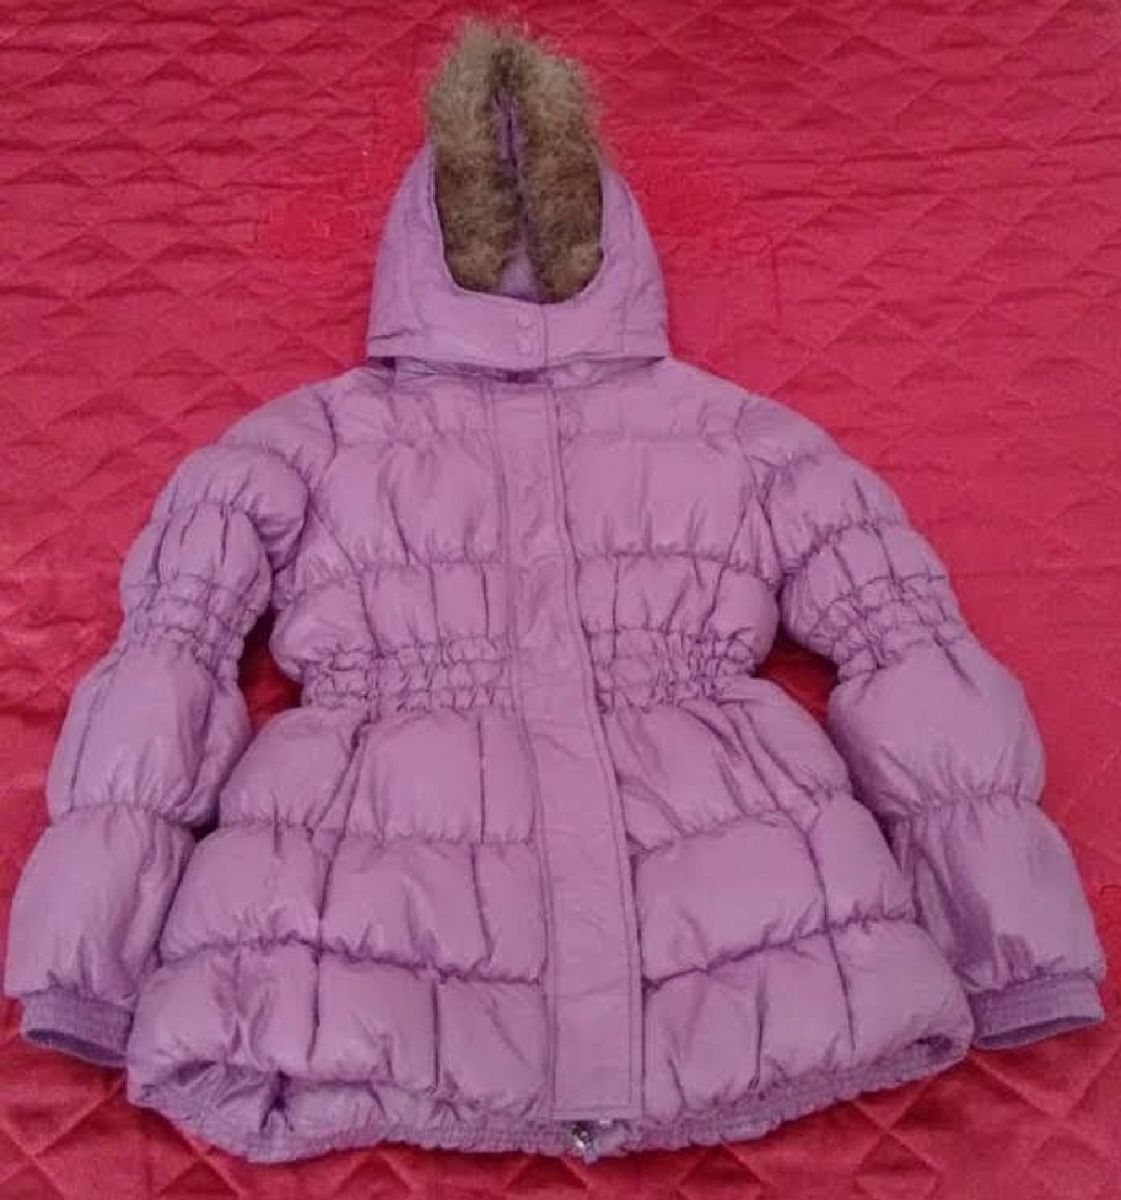 jaqueta neve infantil